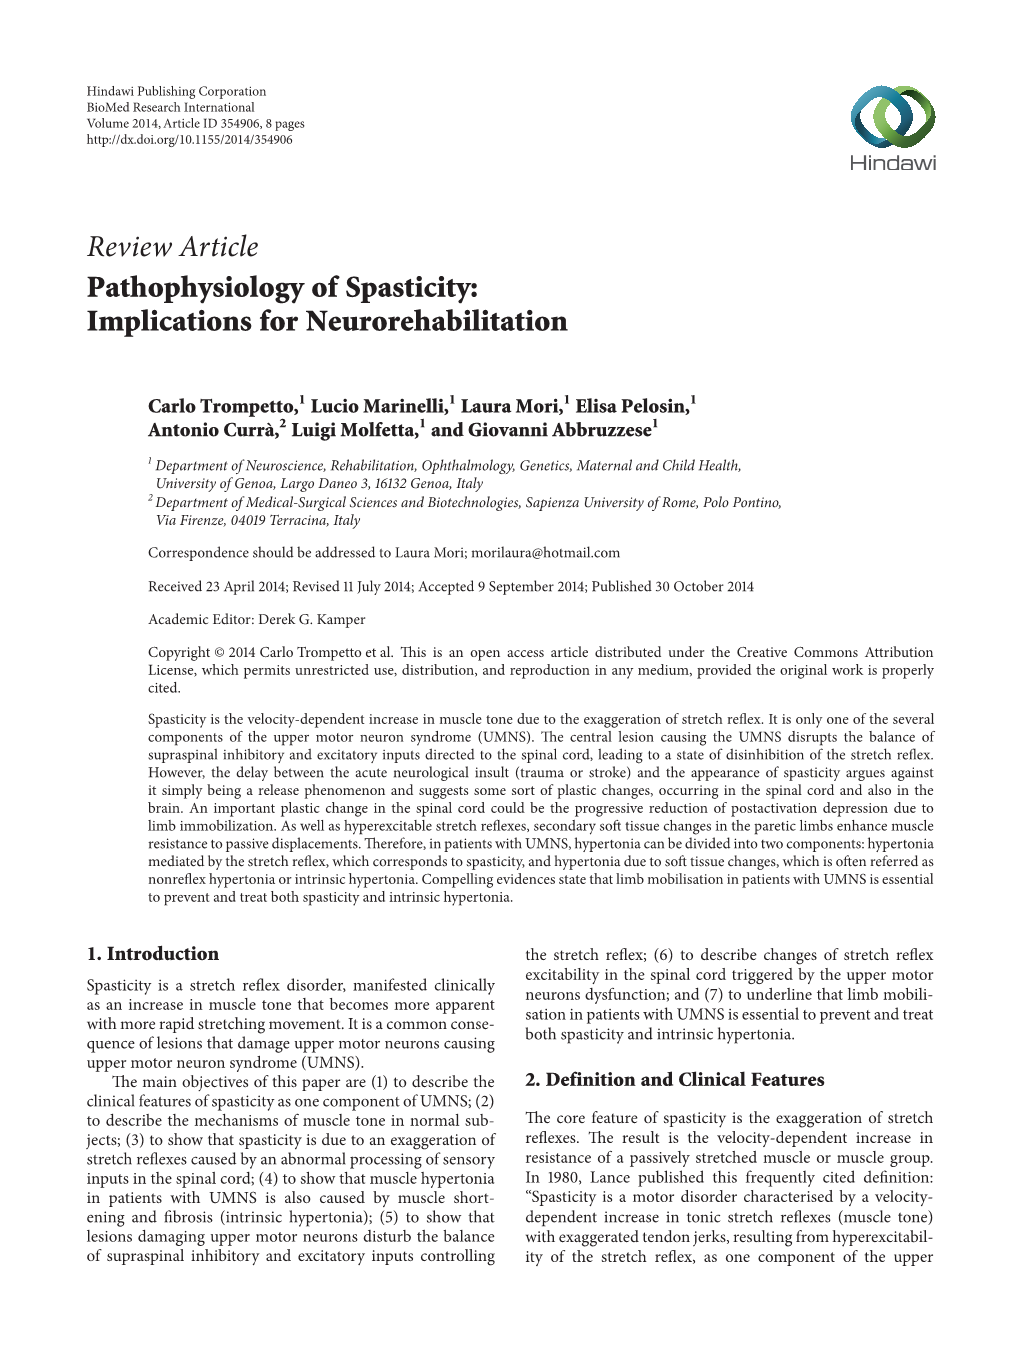 Pathophysiology of Spasticity: Implications for Neurorehabilitation